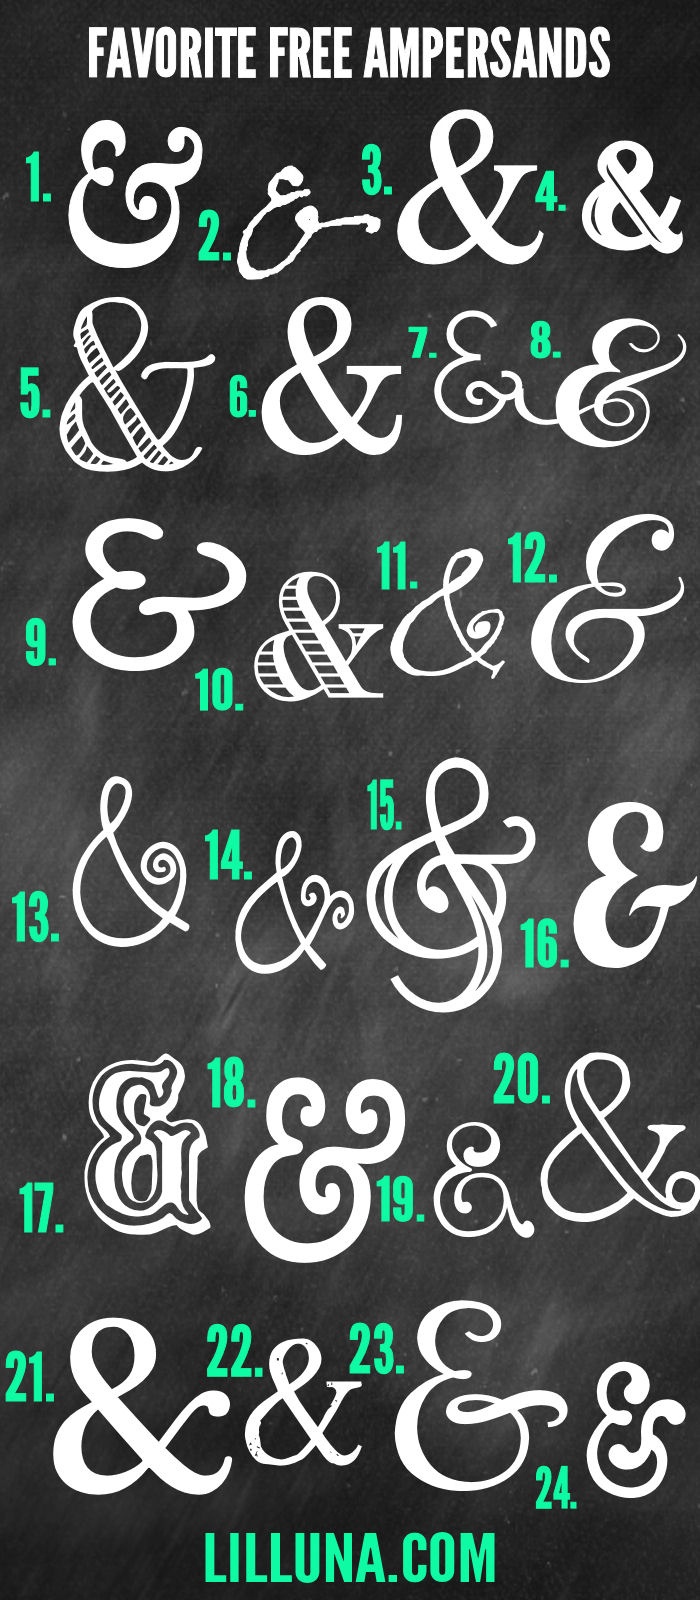 Favorite Free Ampersands - Free Printable Ampersand Symbol